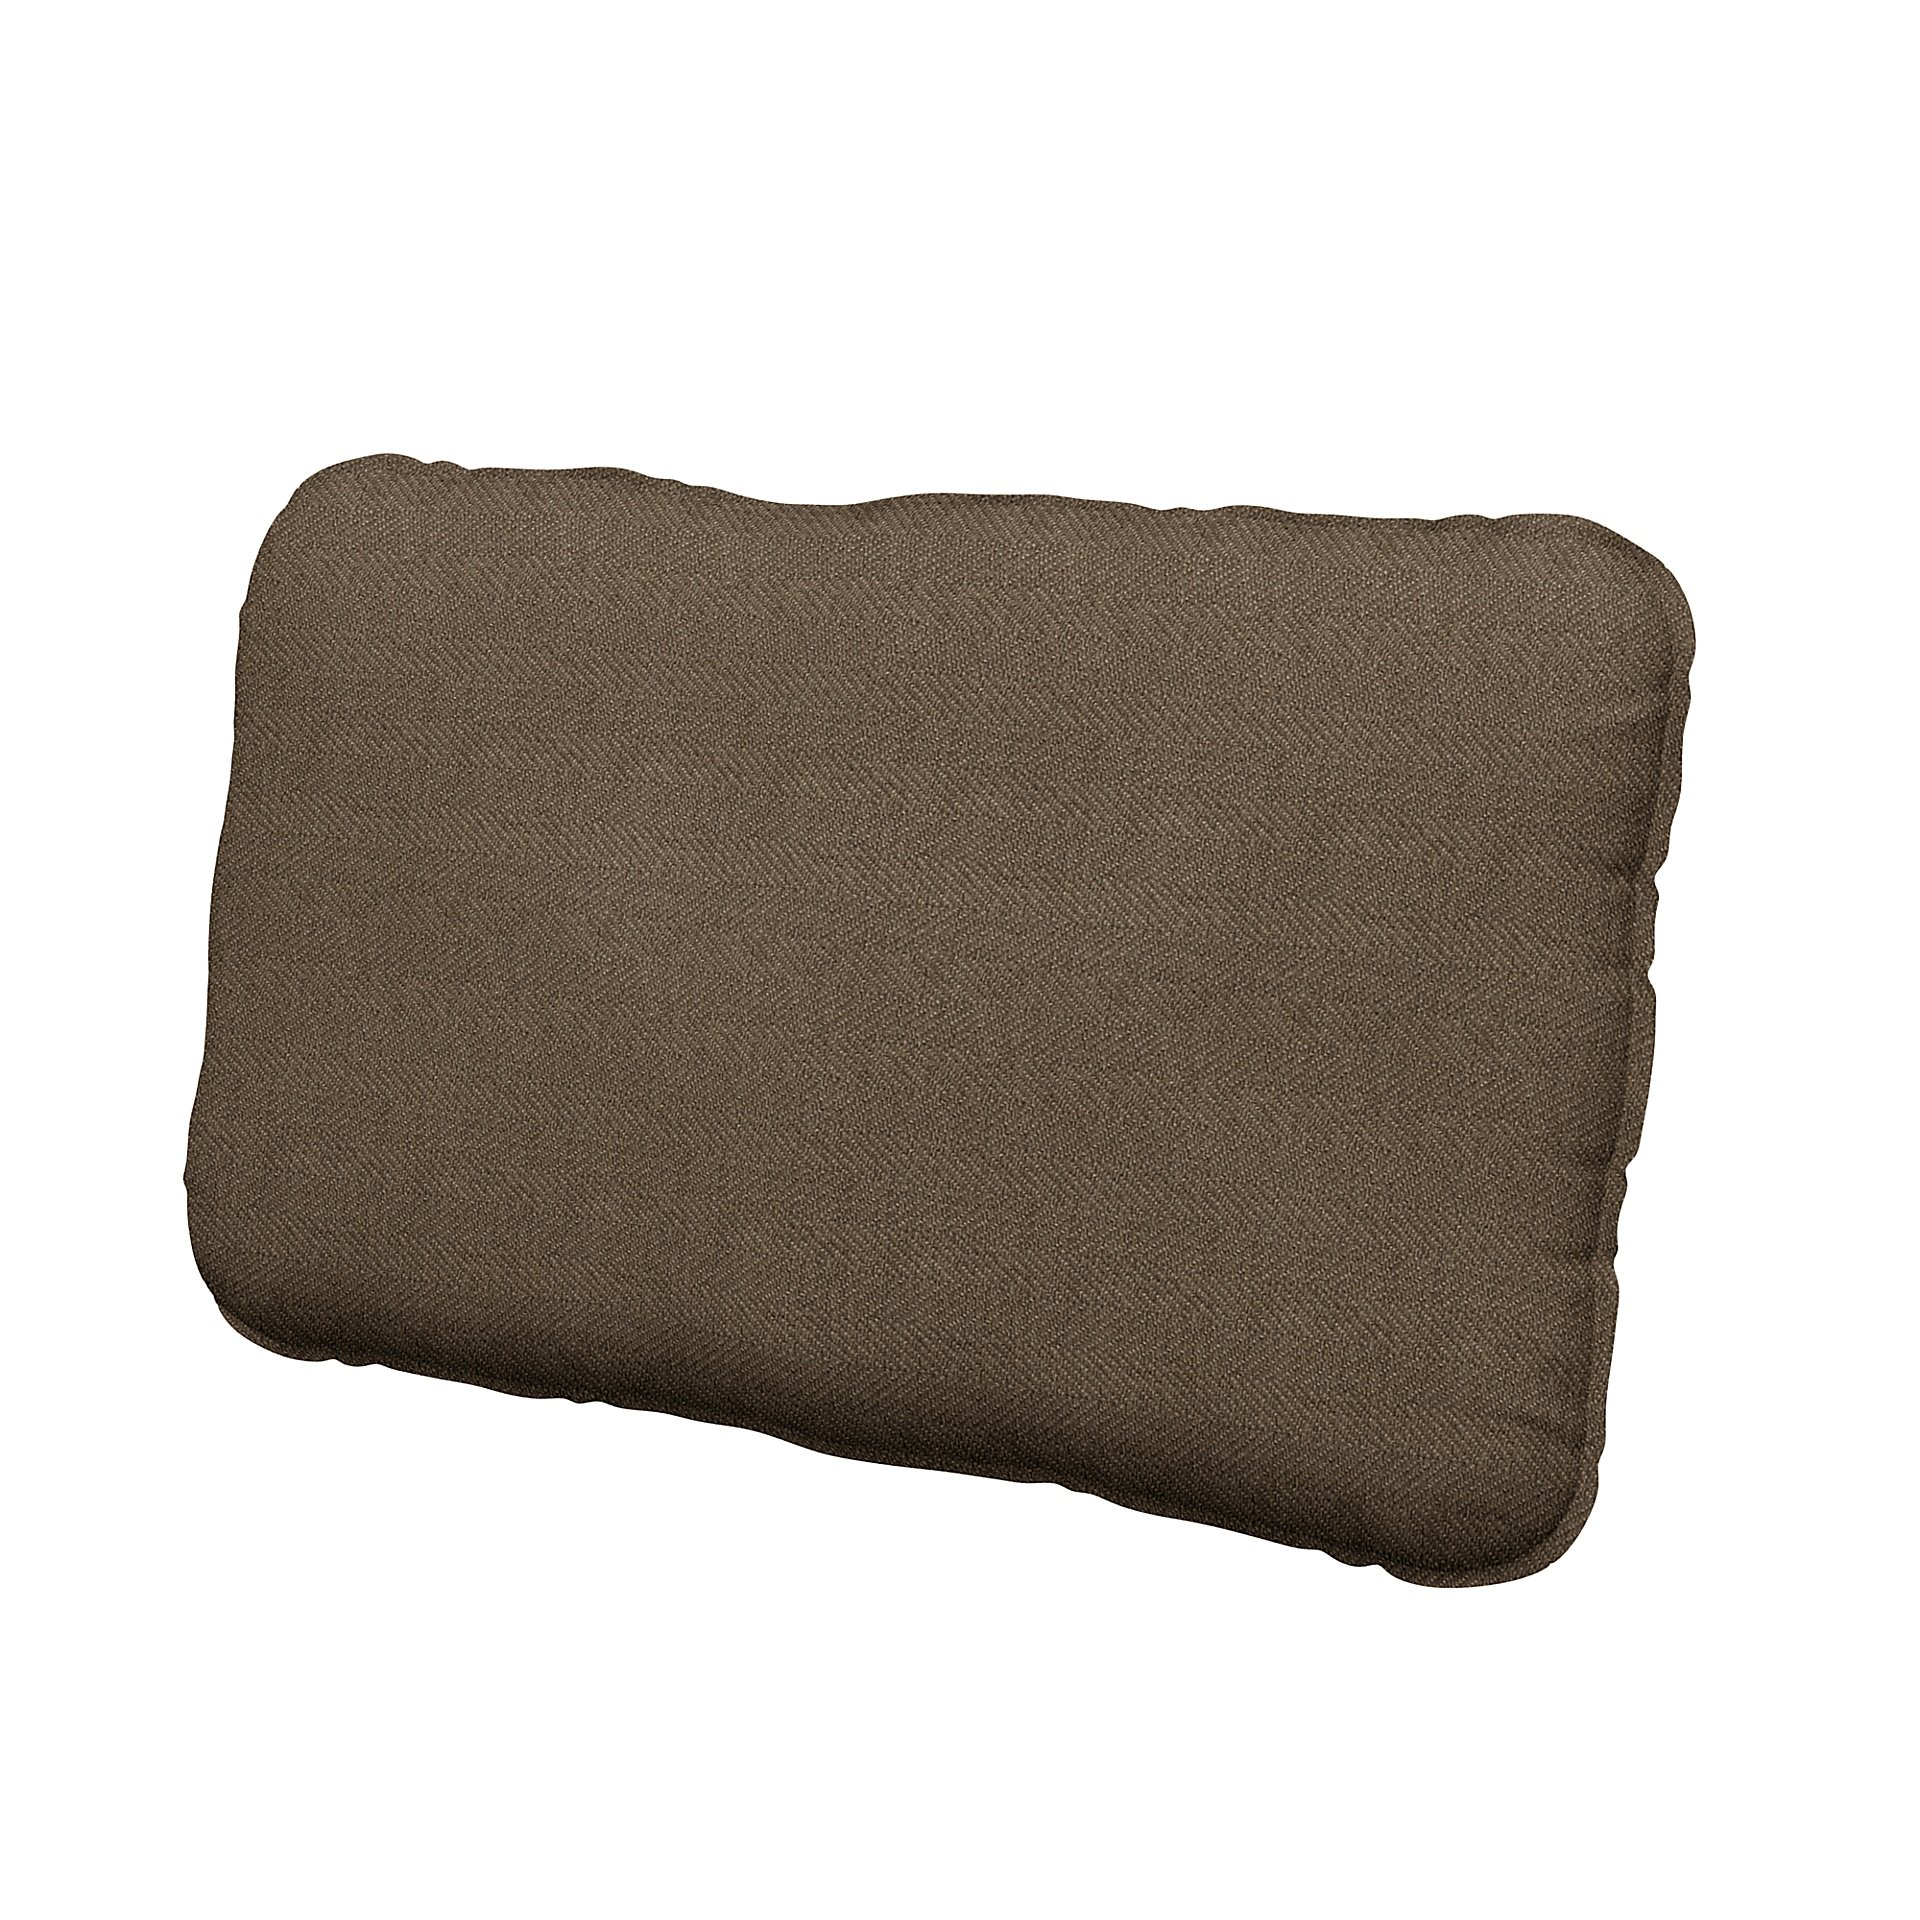 IKEA - Vallentuna back cushion cover 40x75cm, Dark Taupe, Boucle & Texture - Bemz